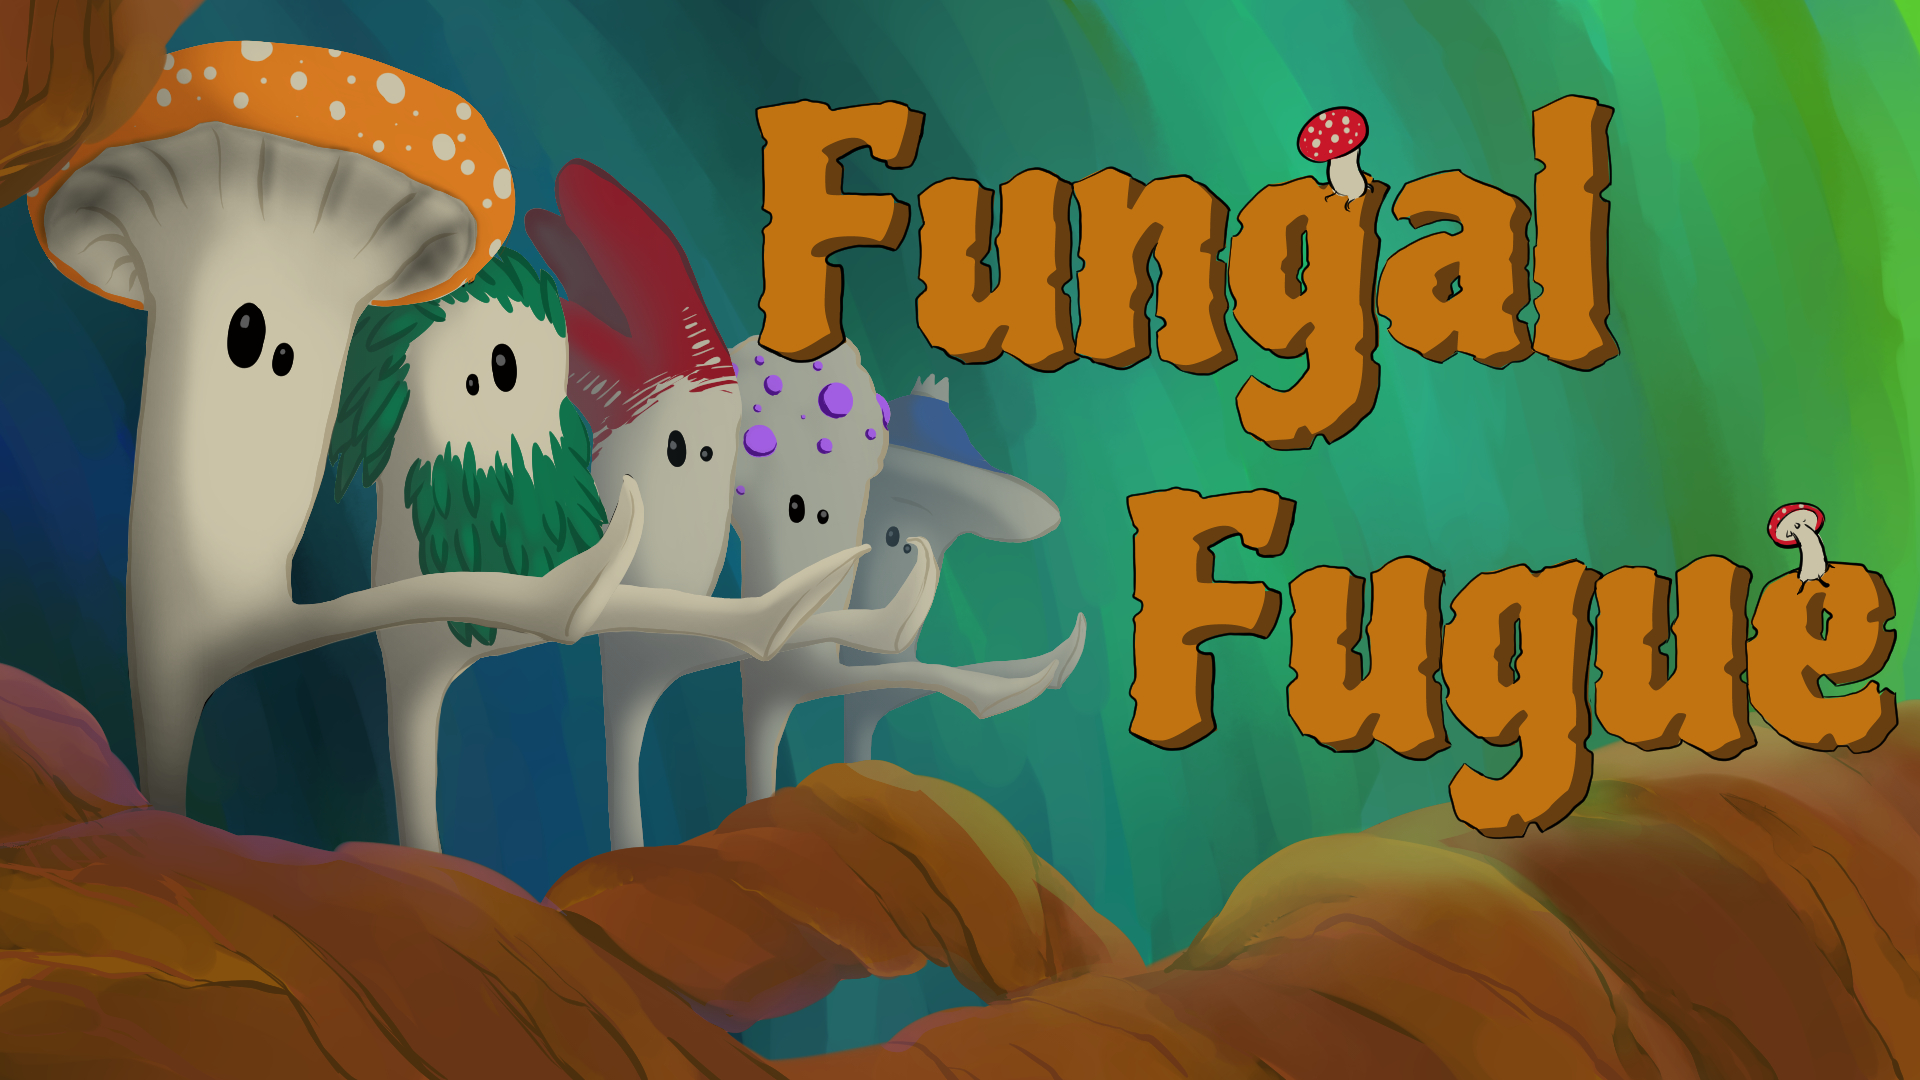 Fungal Fugue